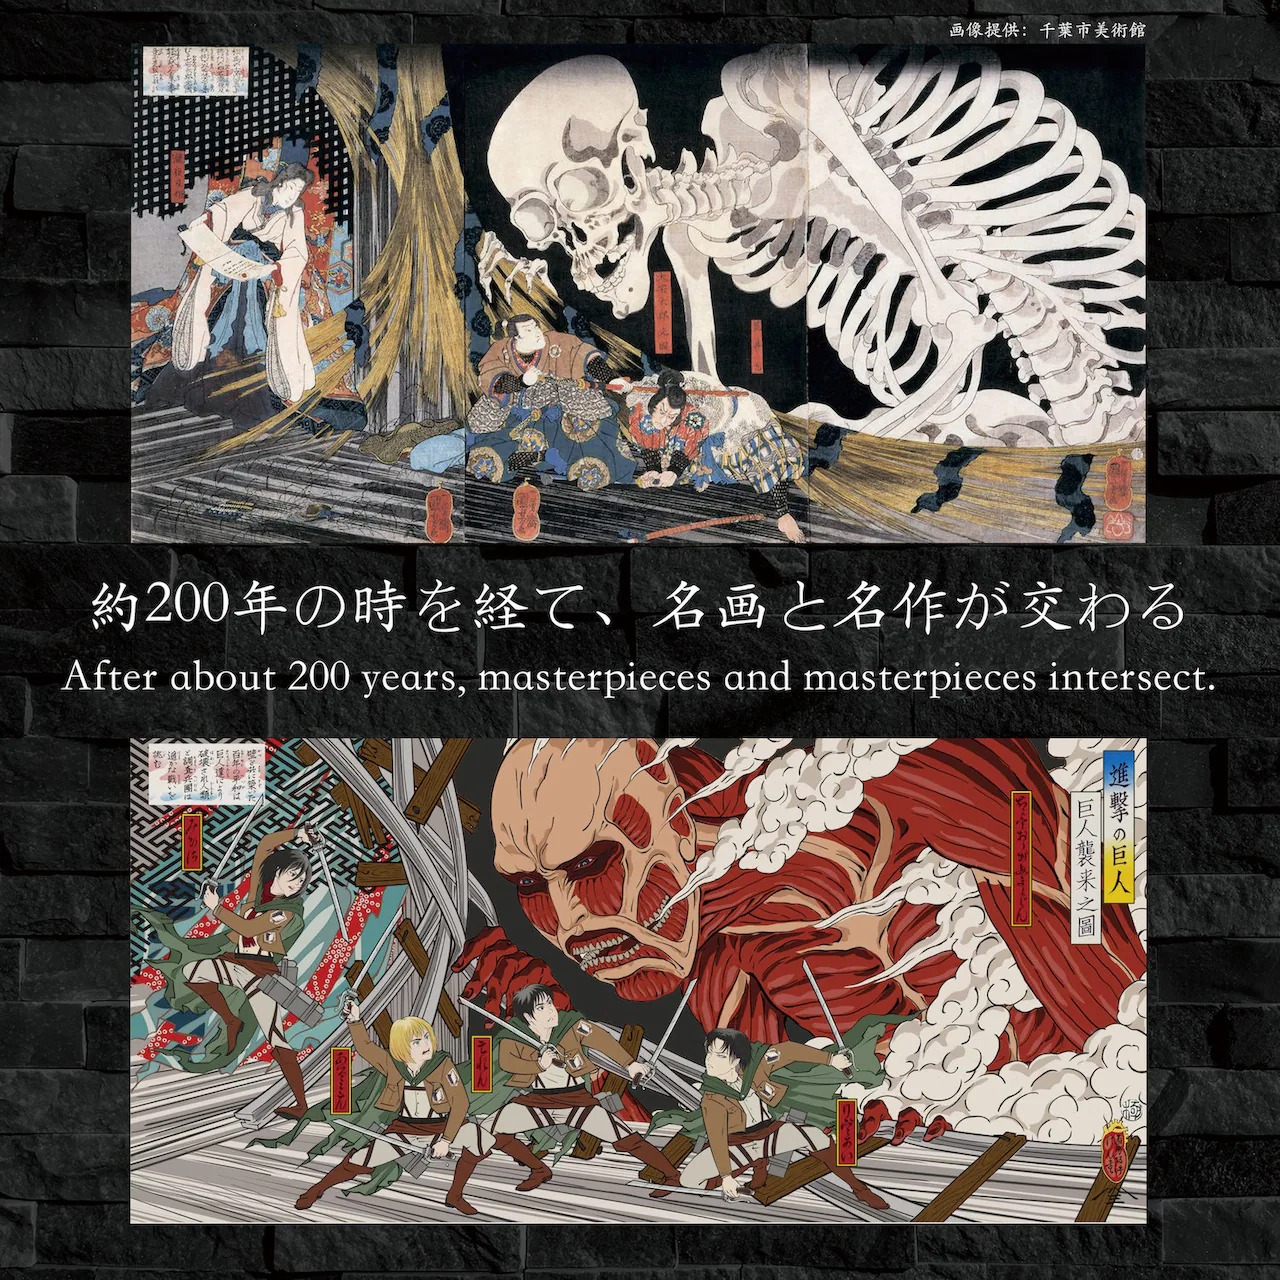 Attack on Titan ukiyo-e design